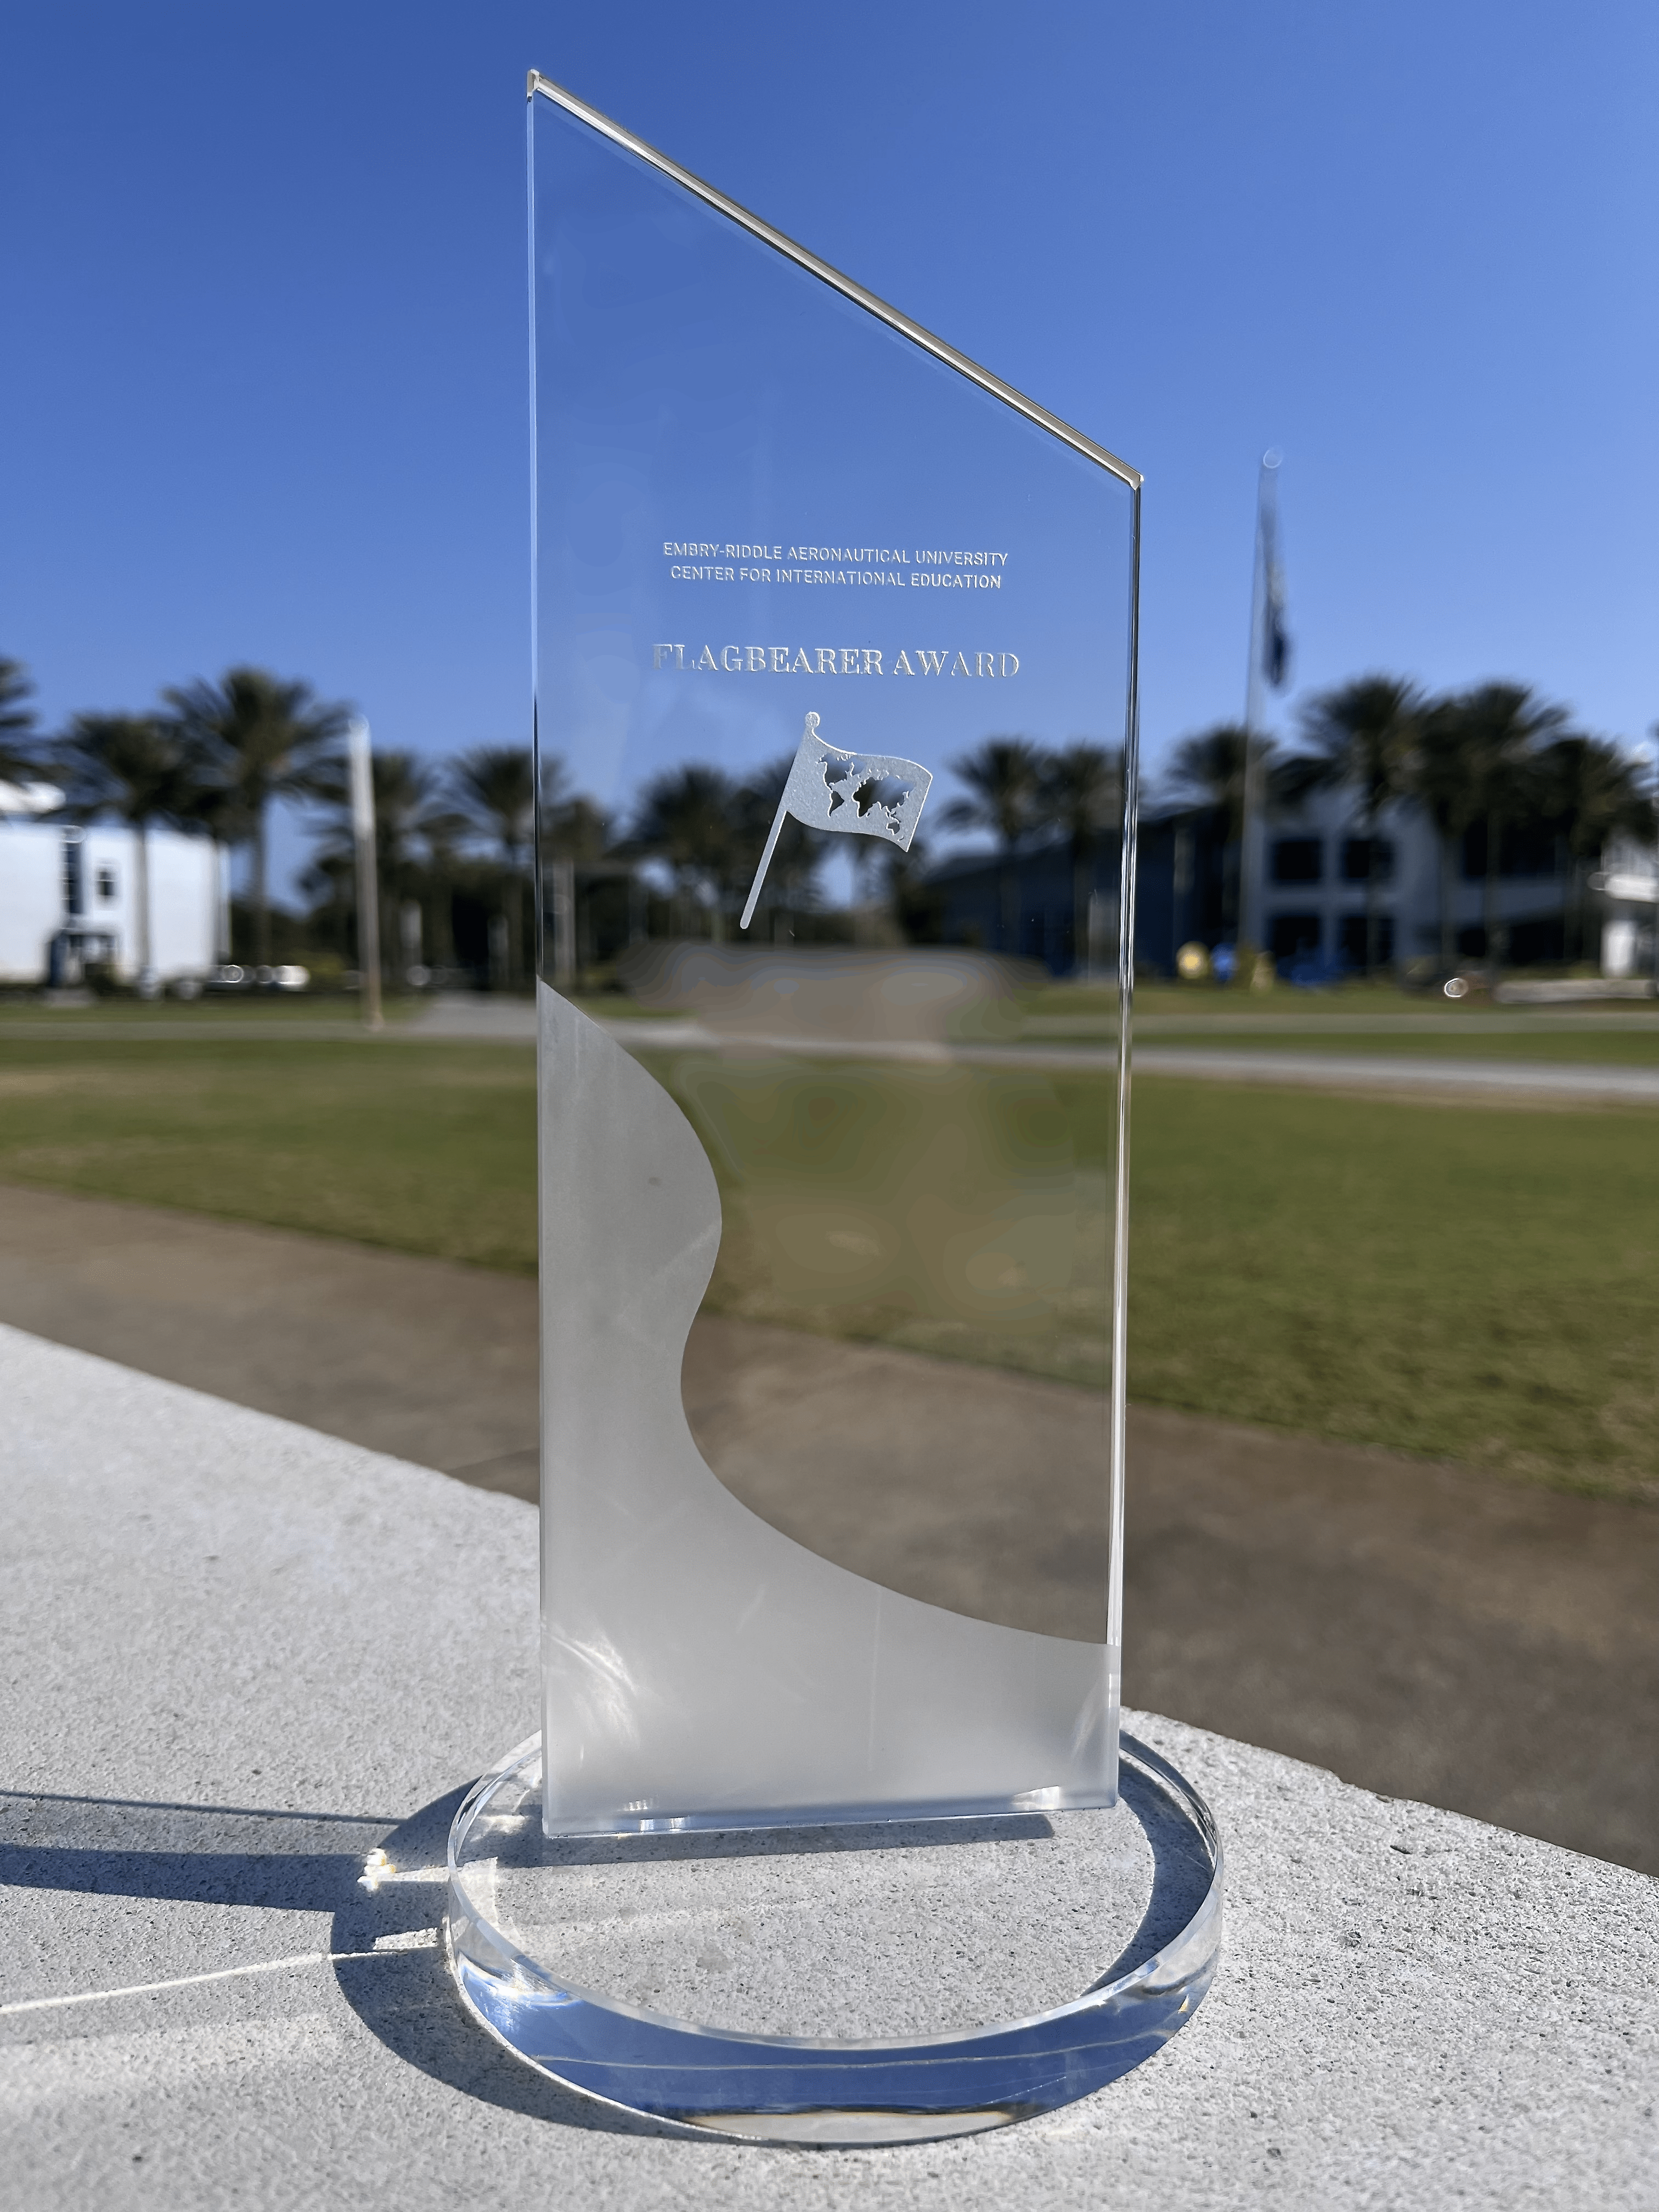 A glass award sitting on a wall outside.